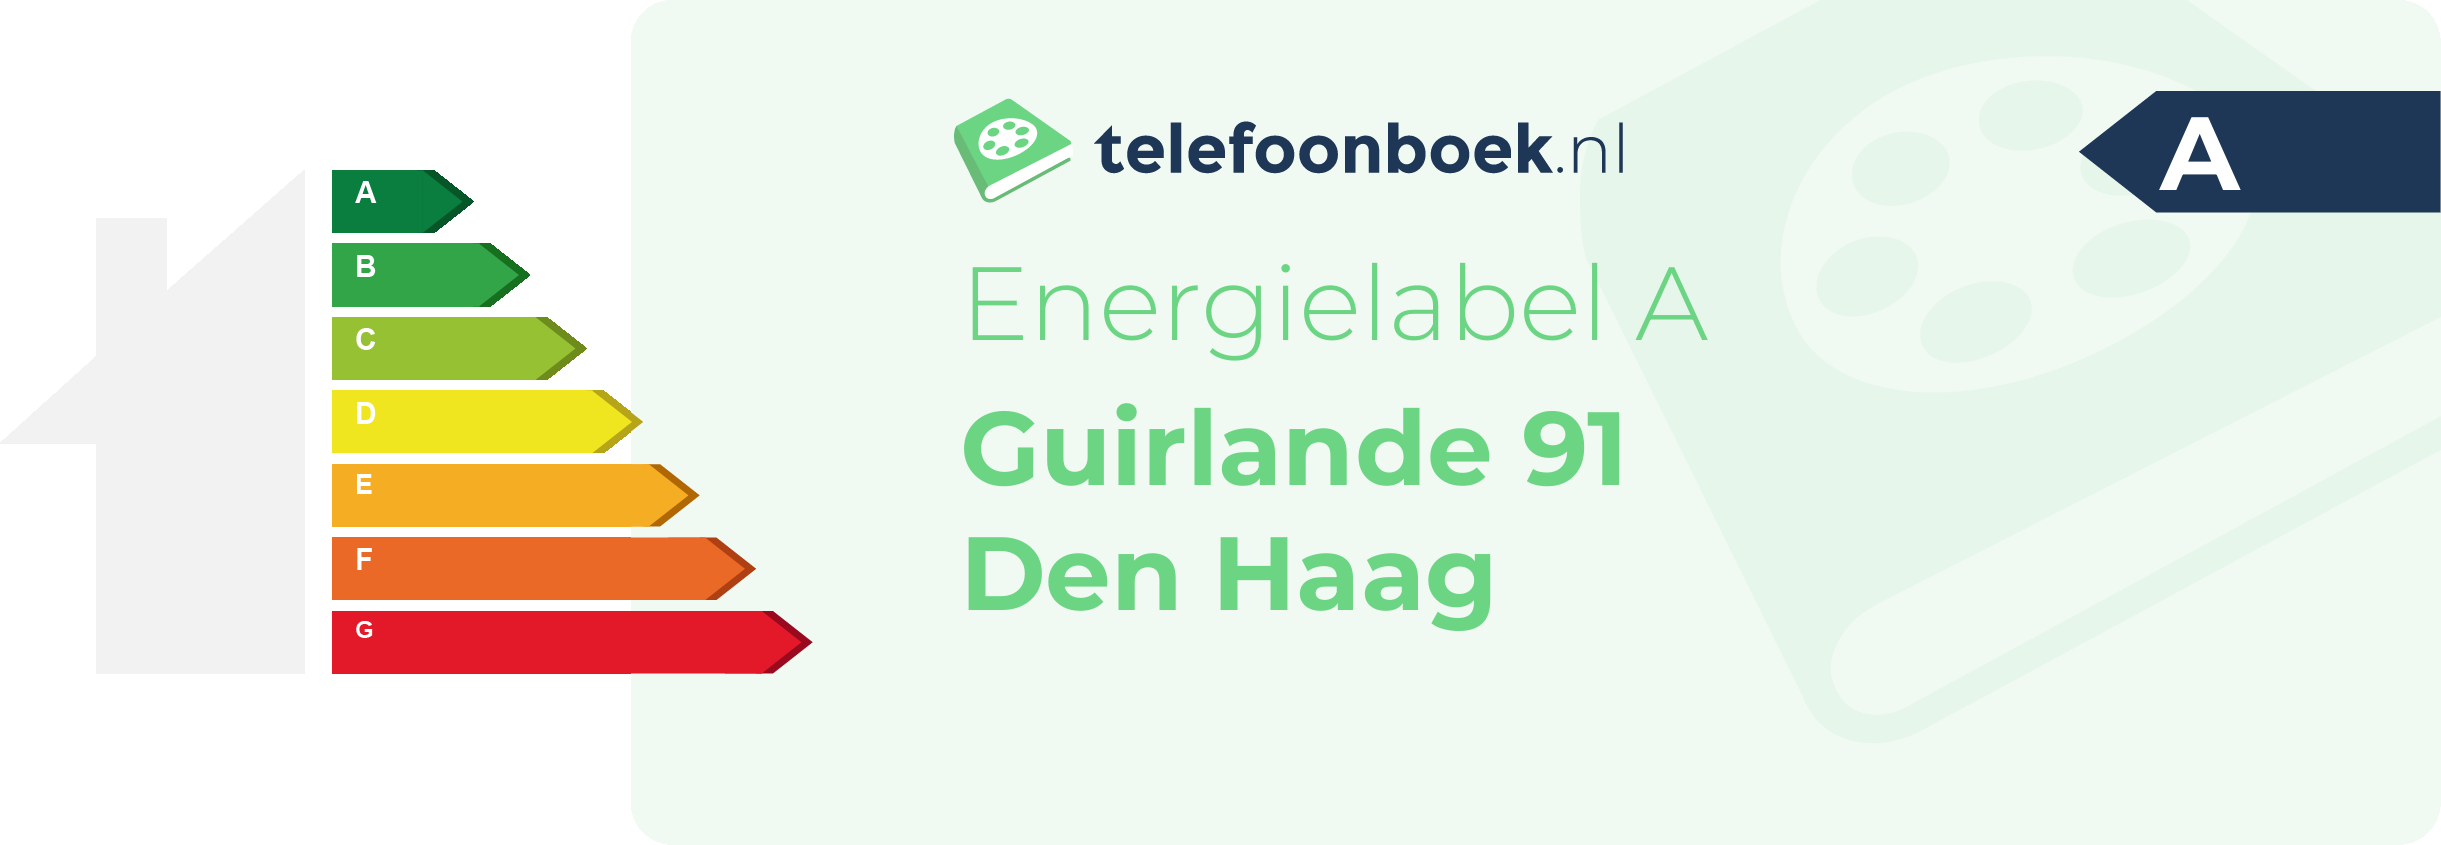 Energielabel Guirlande 91 Den Haag